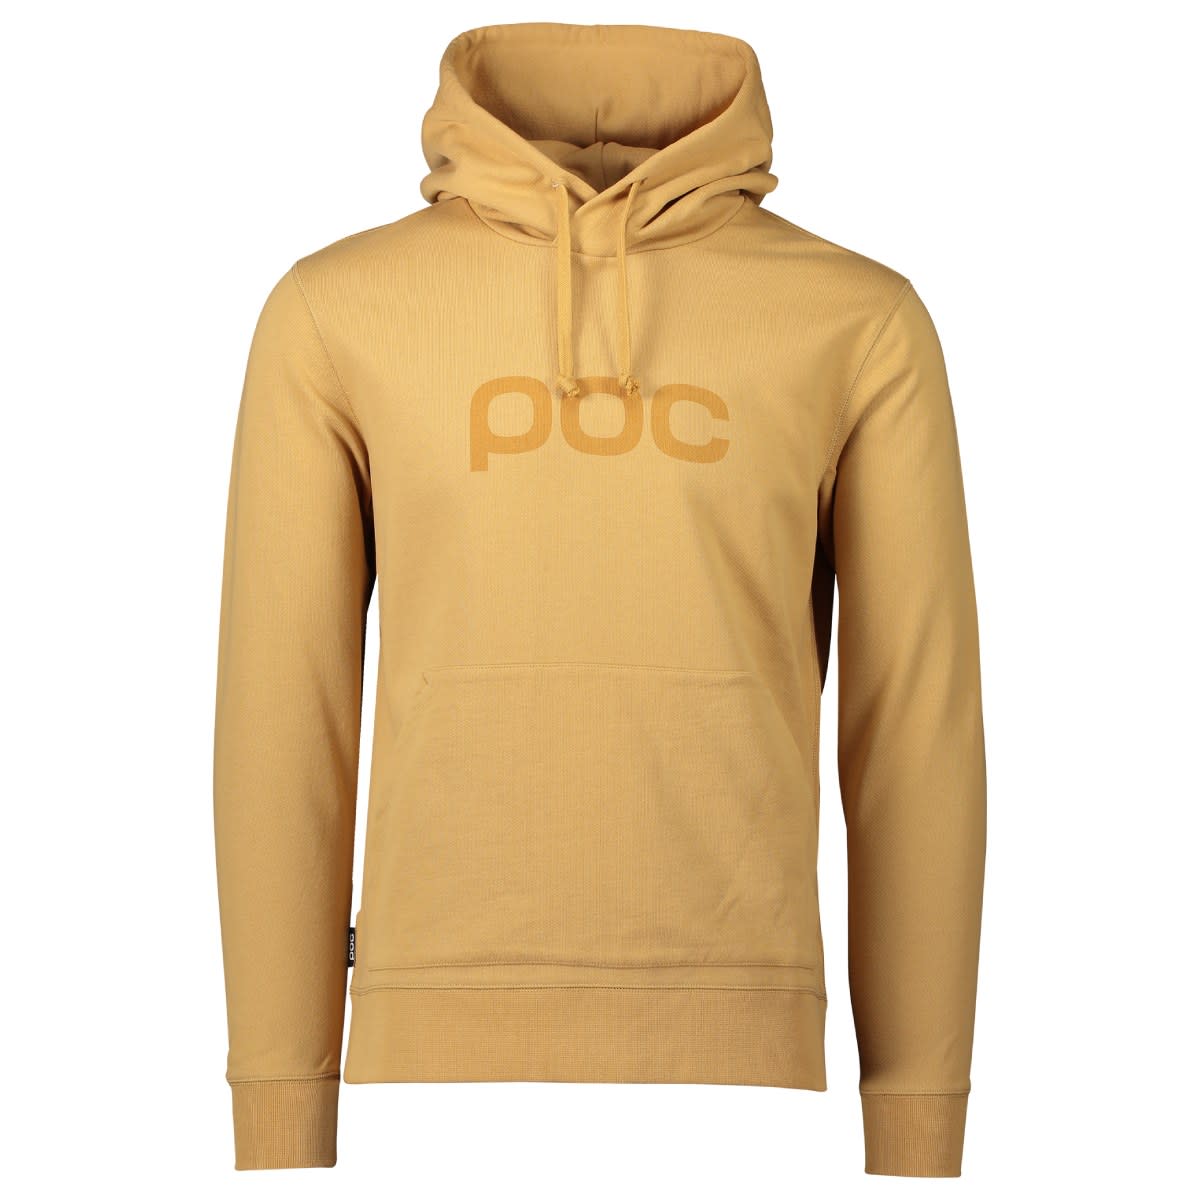 POC Hood Sweater